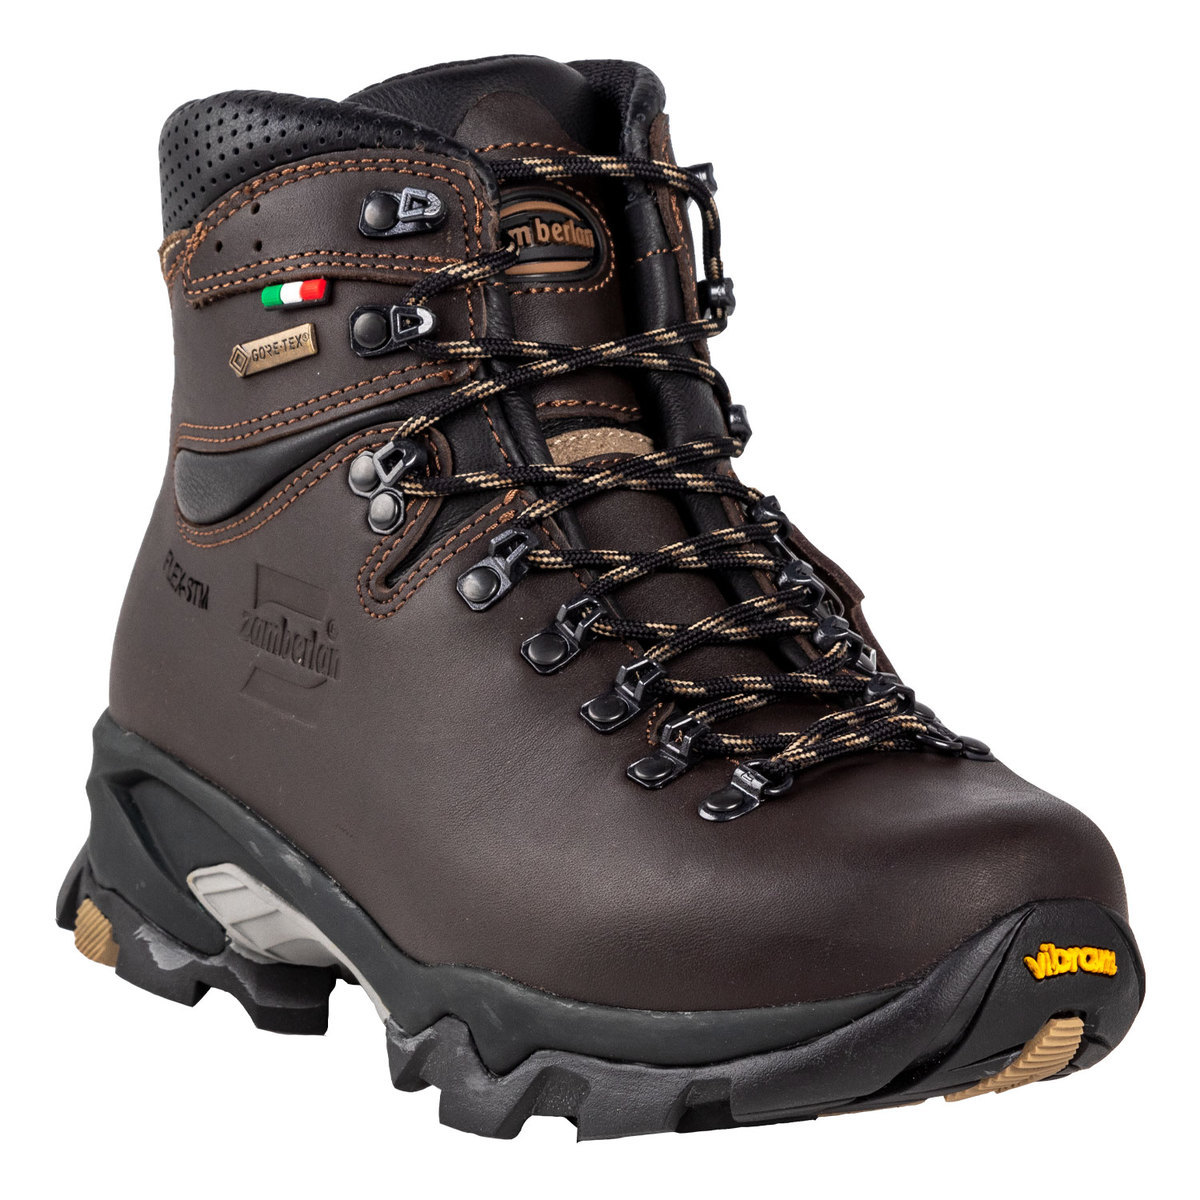 Zamberlan Women's 996 Vioz GORE-TEX® Hiking Boots - Dark Brown/Beige 7 ...